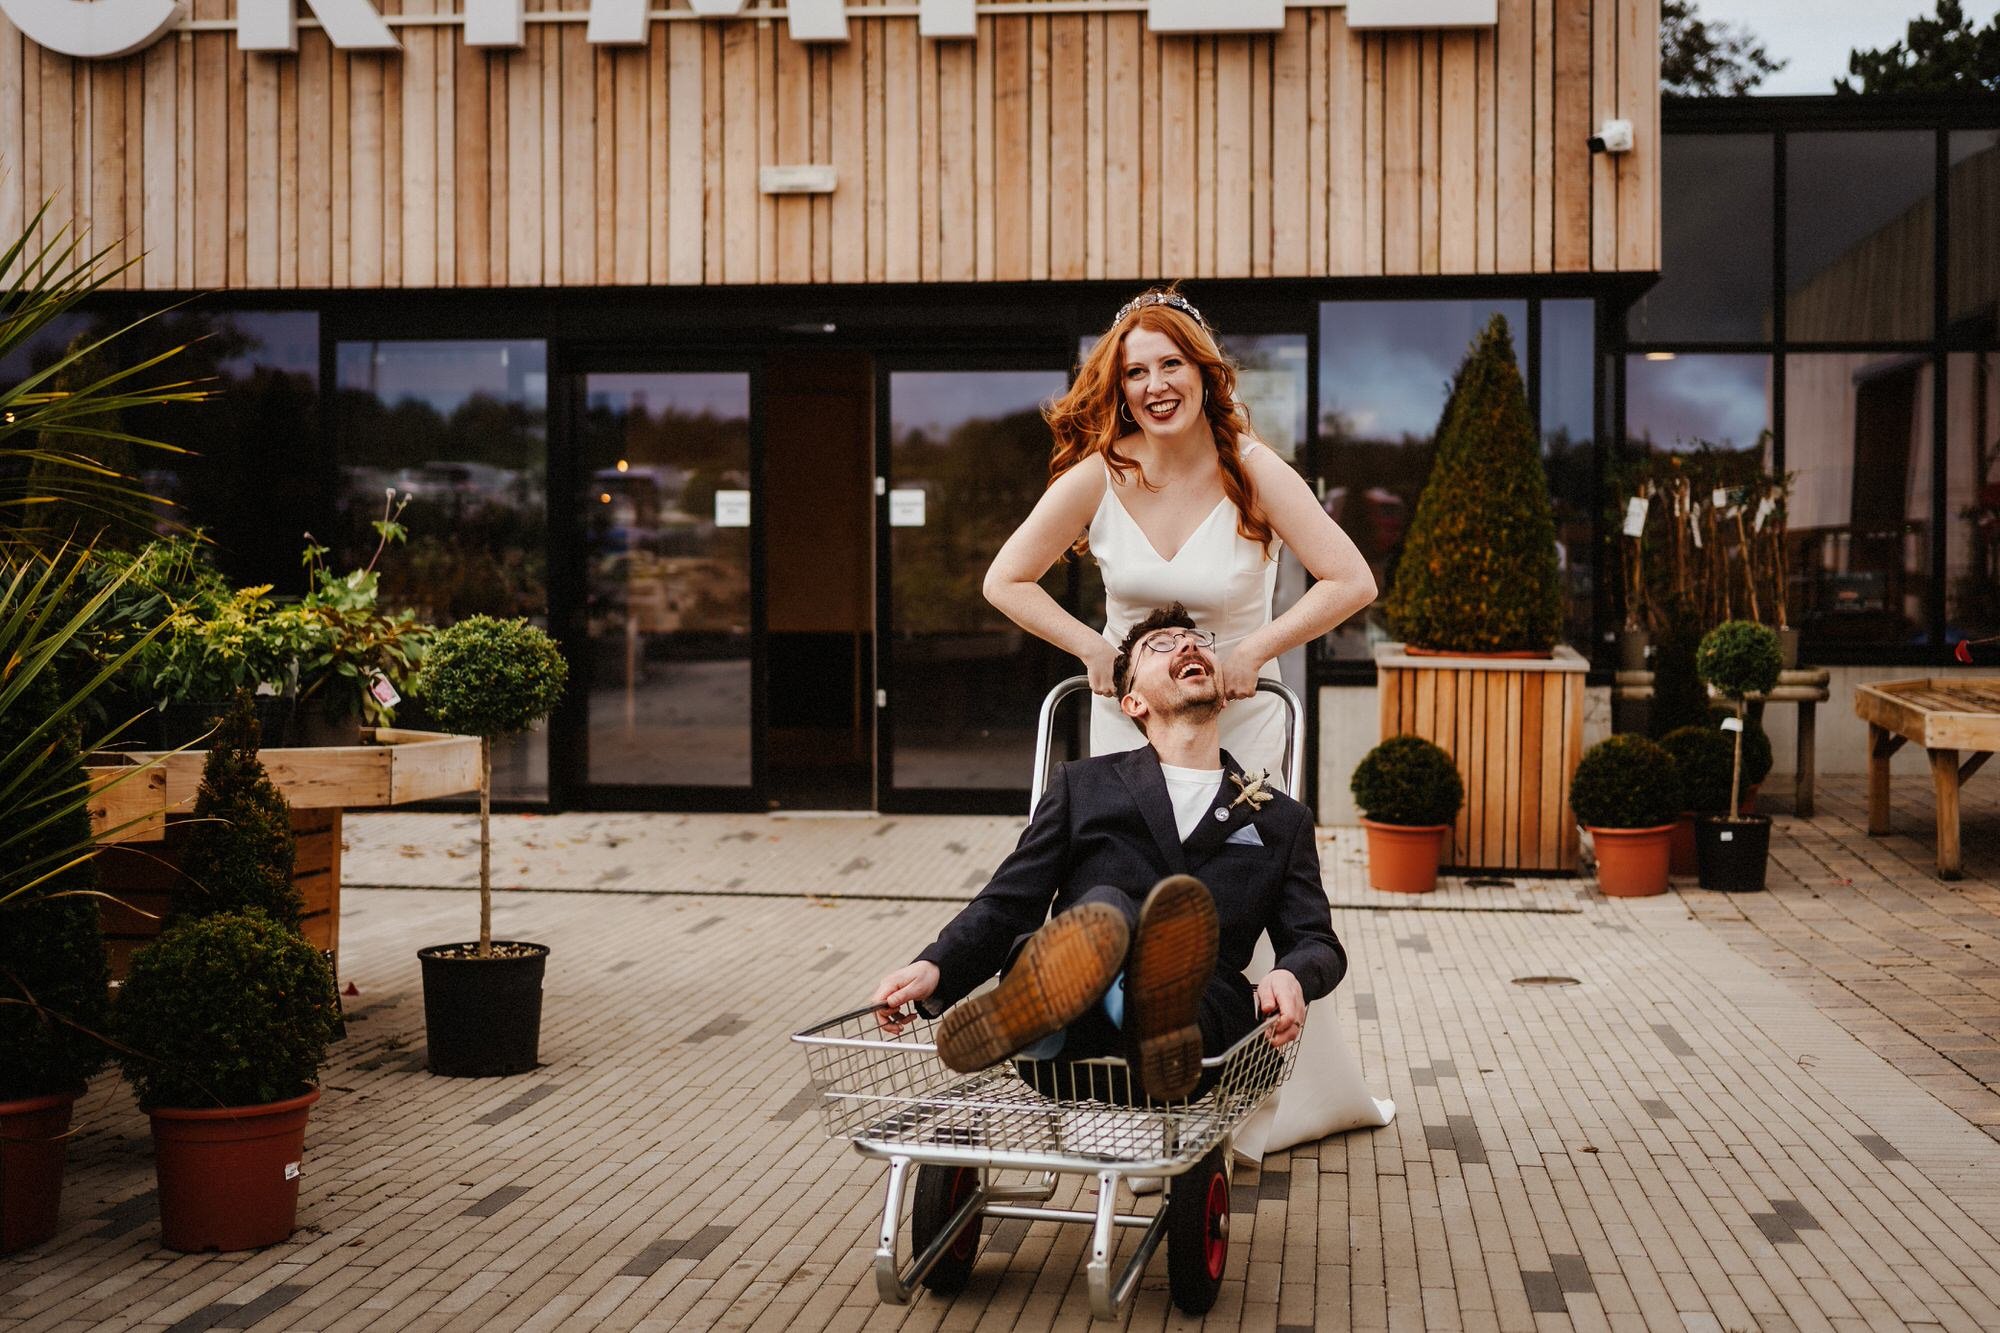 Capturing Whimsy as an Alternative Wedding Photographer